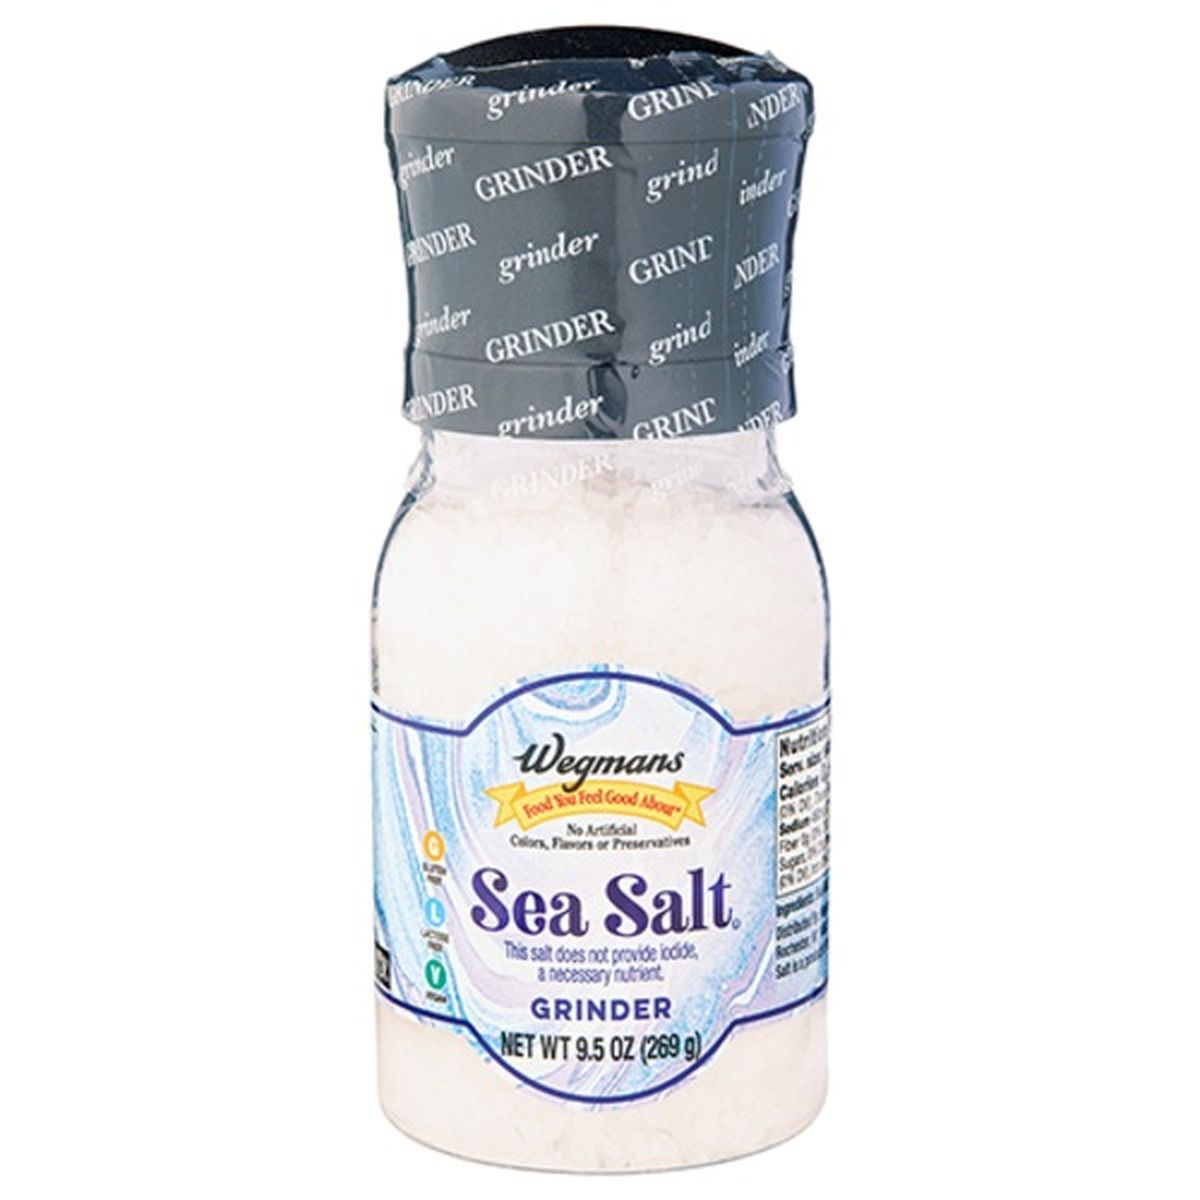 Calories in Wegmans Sea Salt Grinder